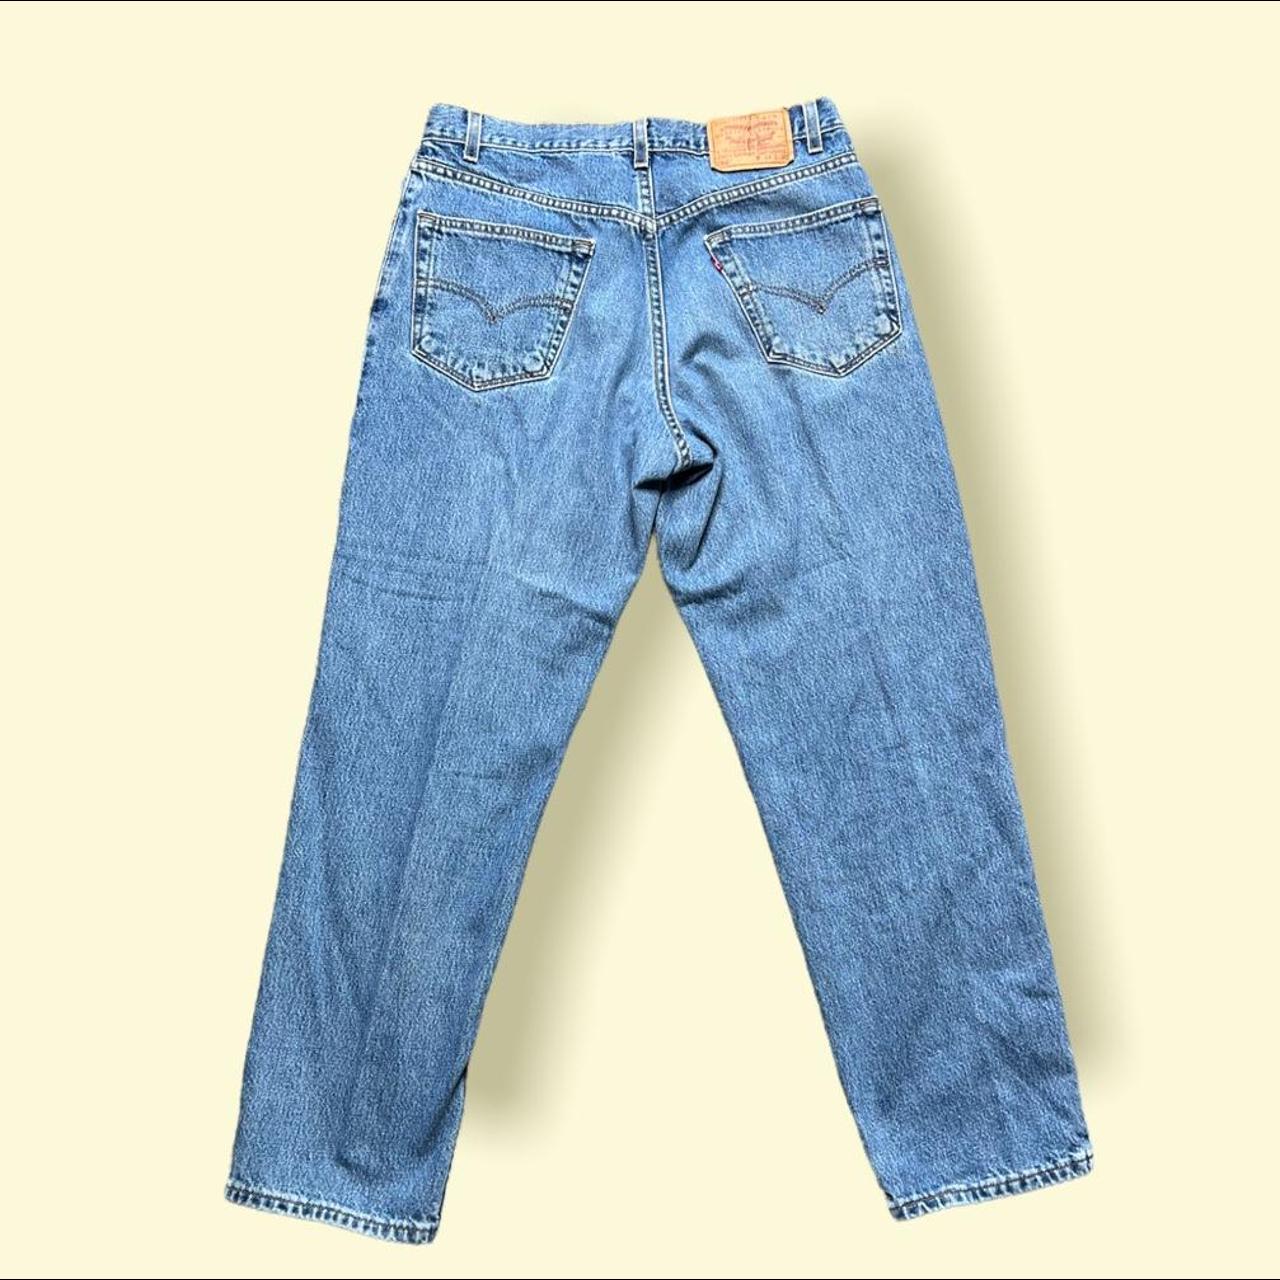 Vintage Levi’s Jeans 1990s Men’s Relaxed Fit Size 34... - Depop